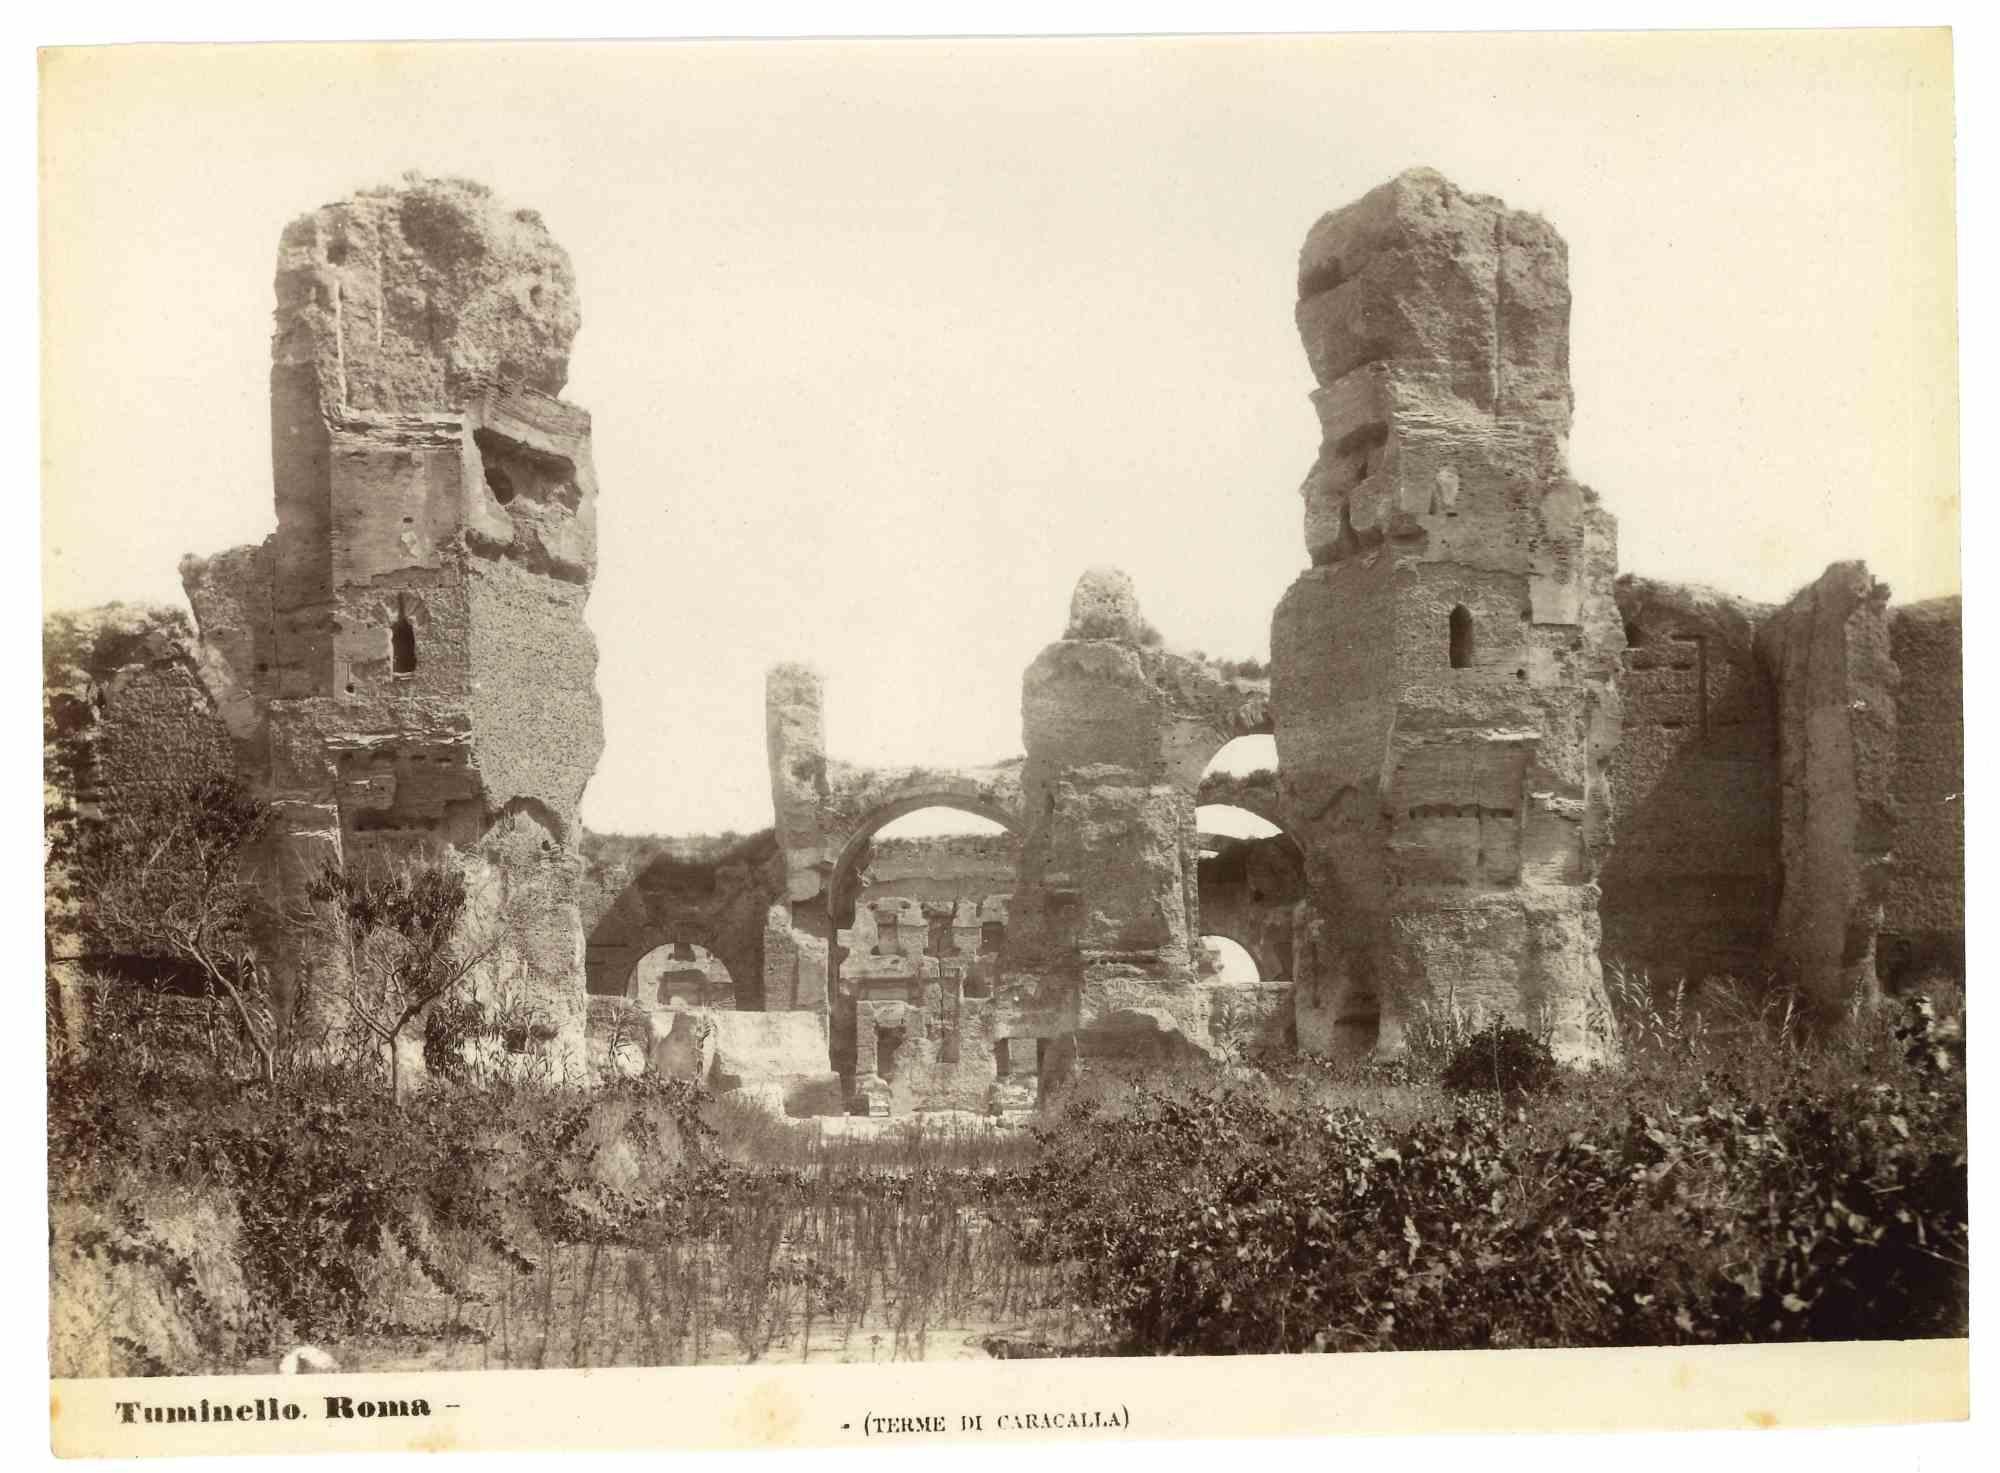 Ludovico Tuminello Landscape Photograph - Baths of Caracalla - Vintage Photograph - Early 20th Century